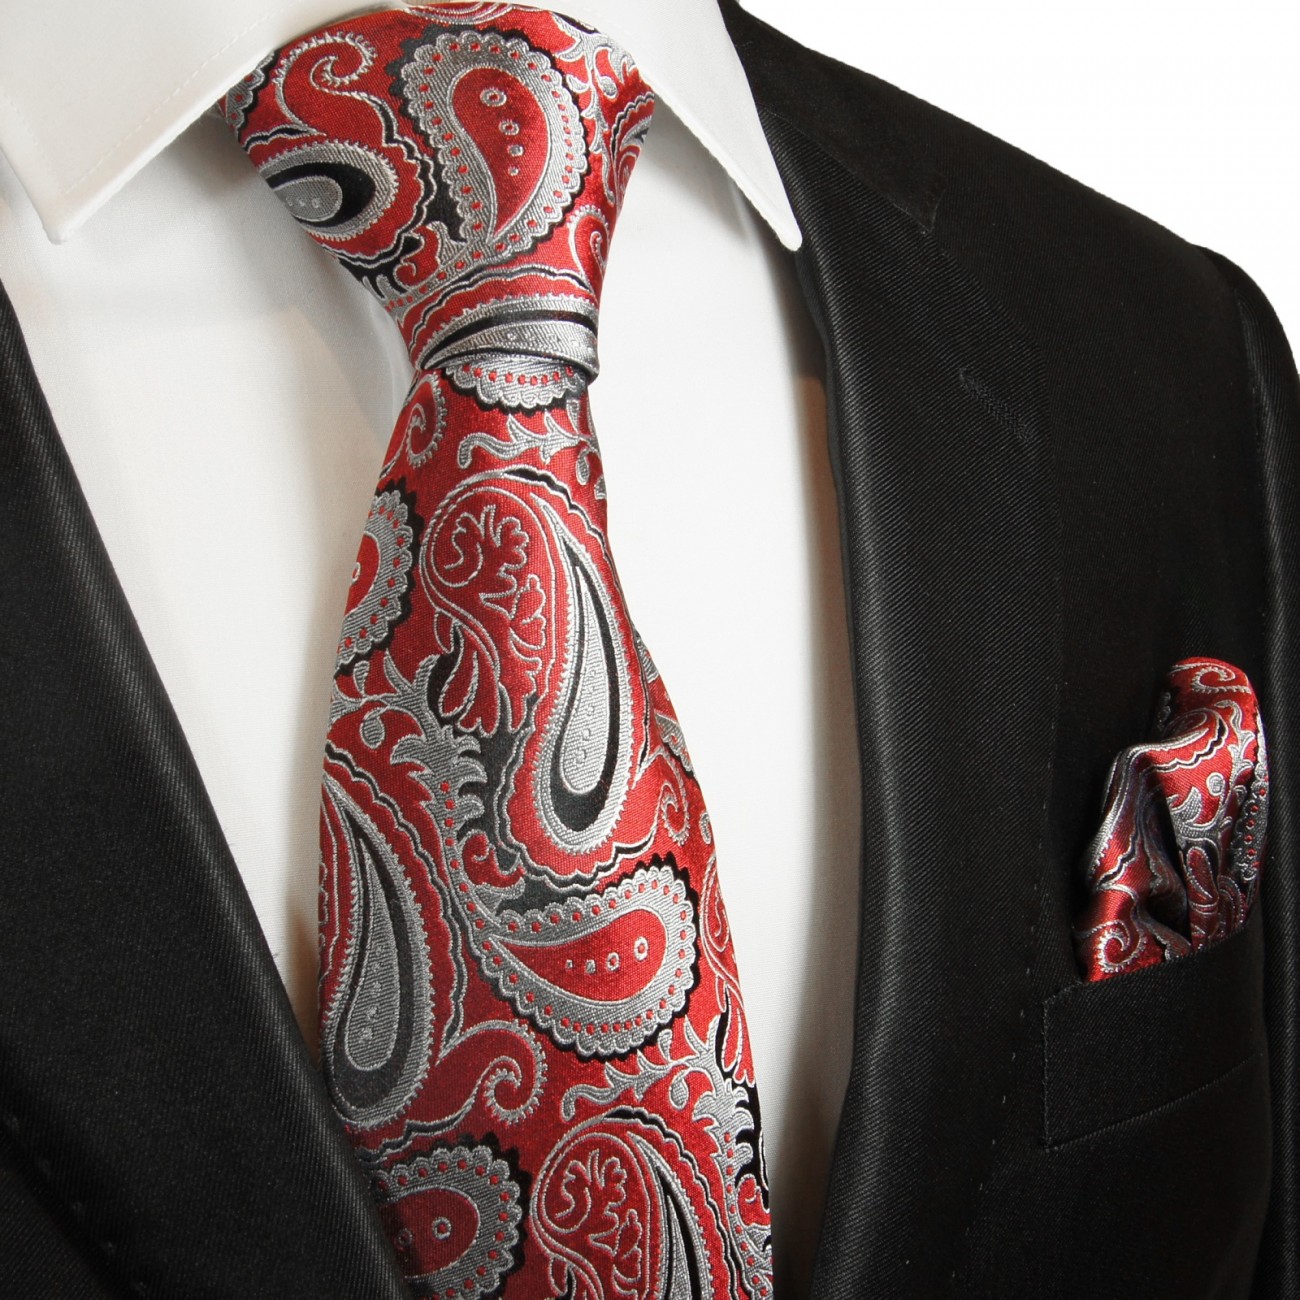 Extra lange Krawatte 165cm - Krawatte rot grau paisley